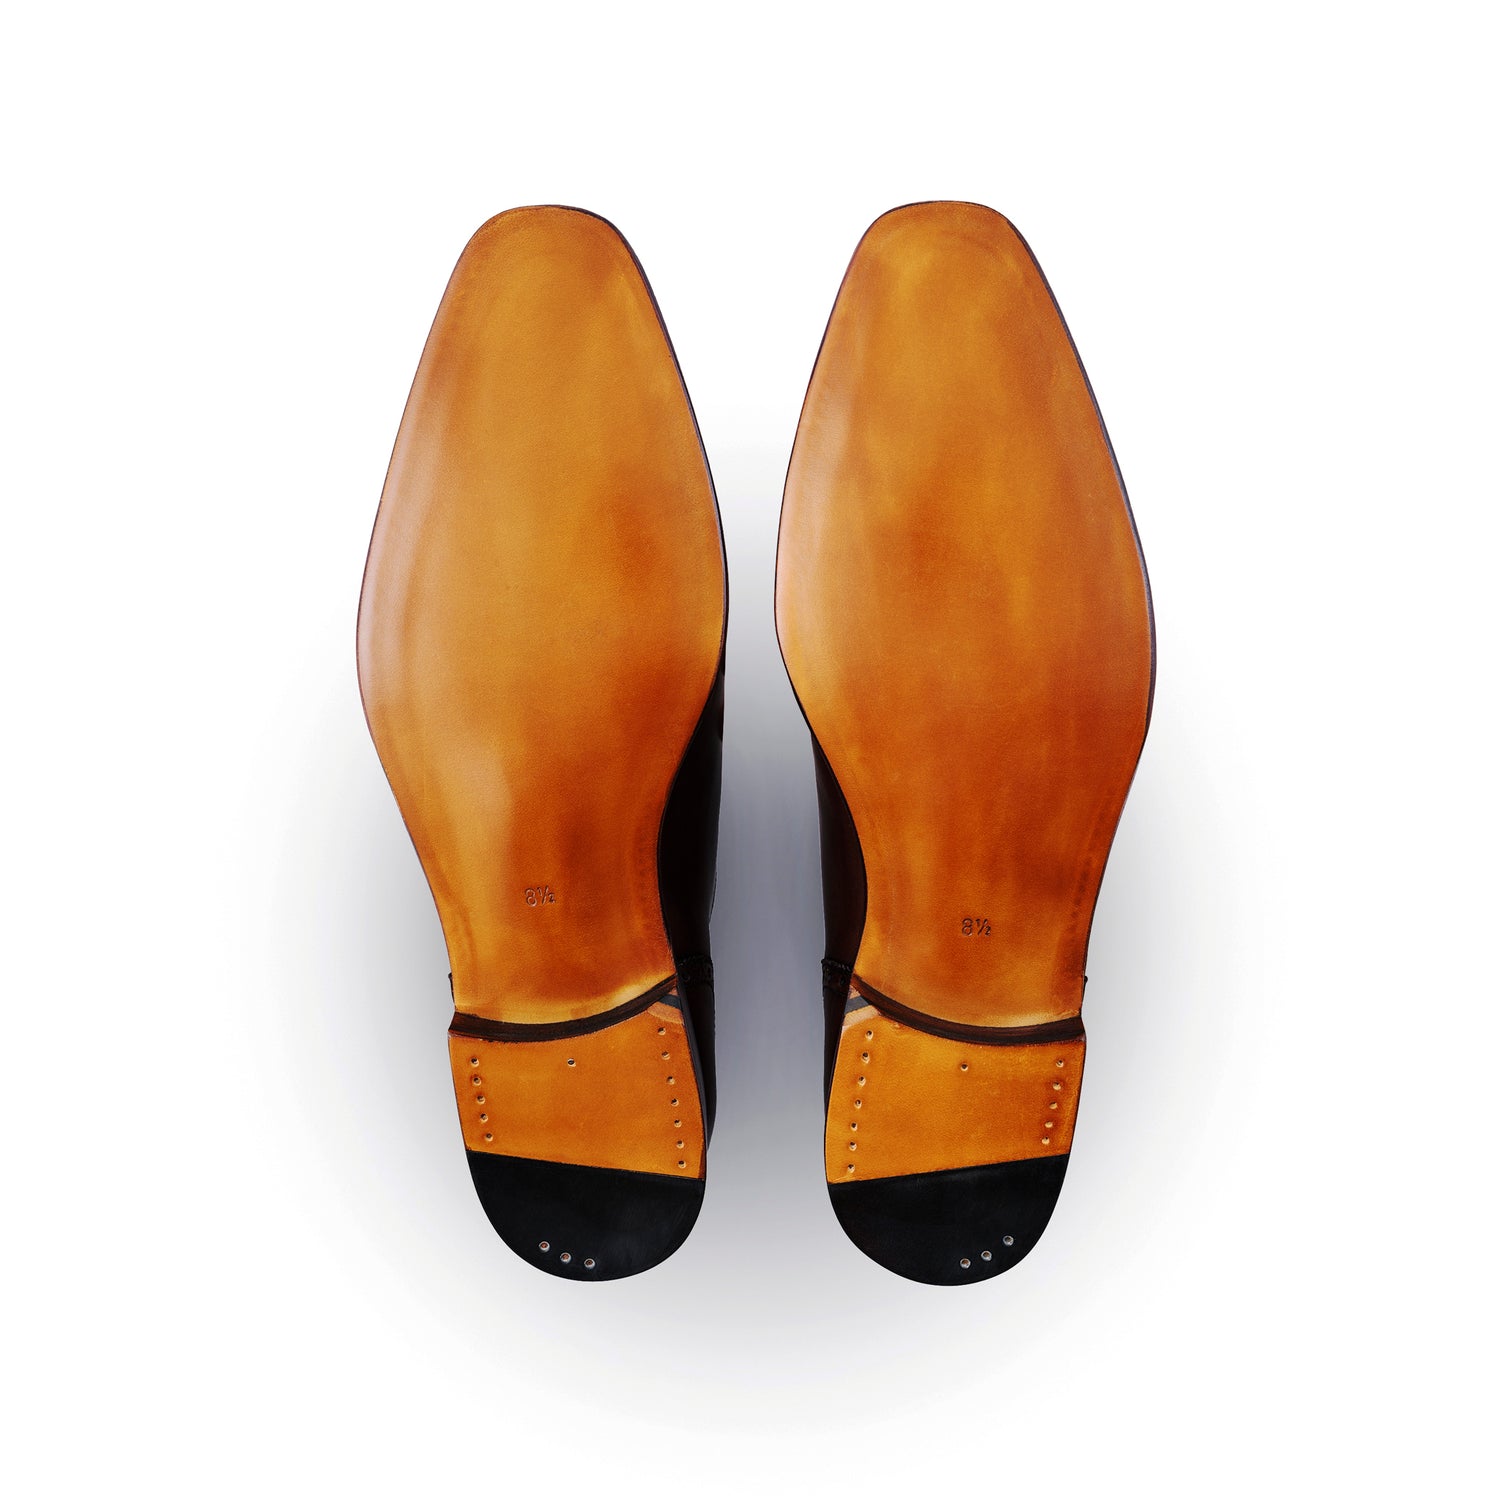 TLB Mallorca leather shoes 656 / JONES / MUSEUM CALF BURGUNDY